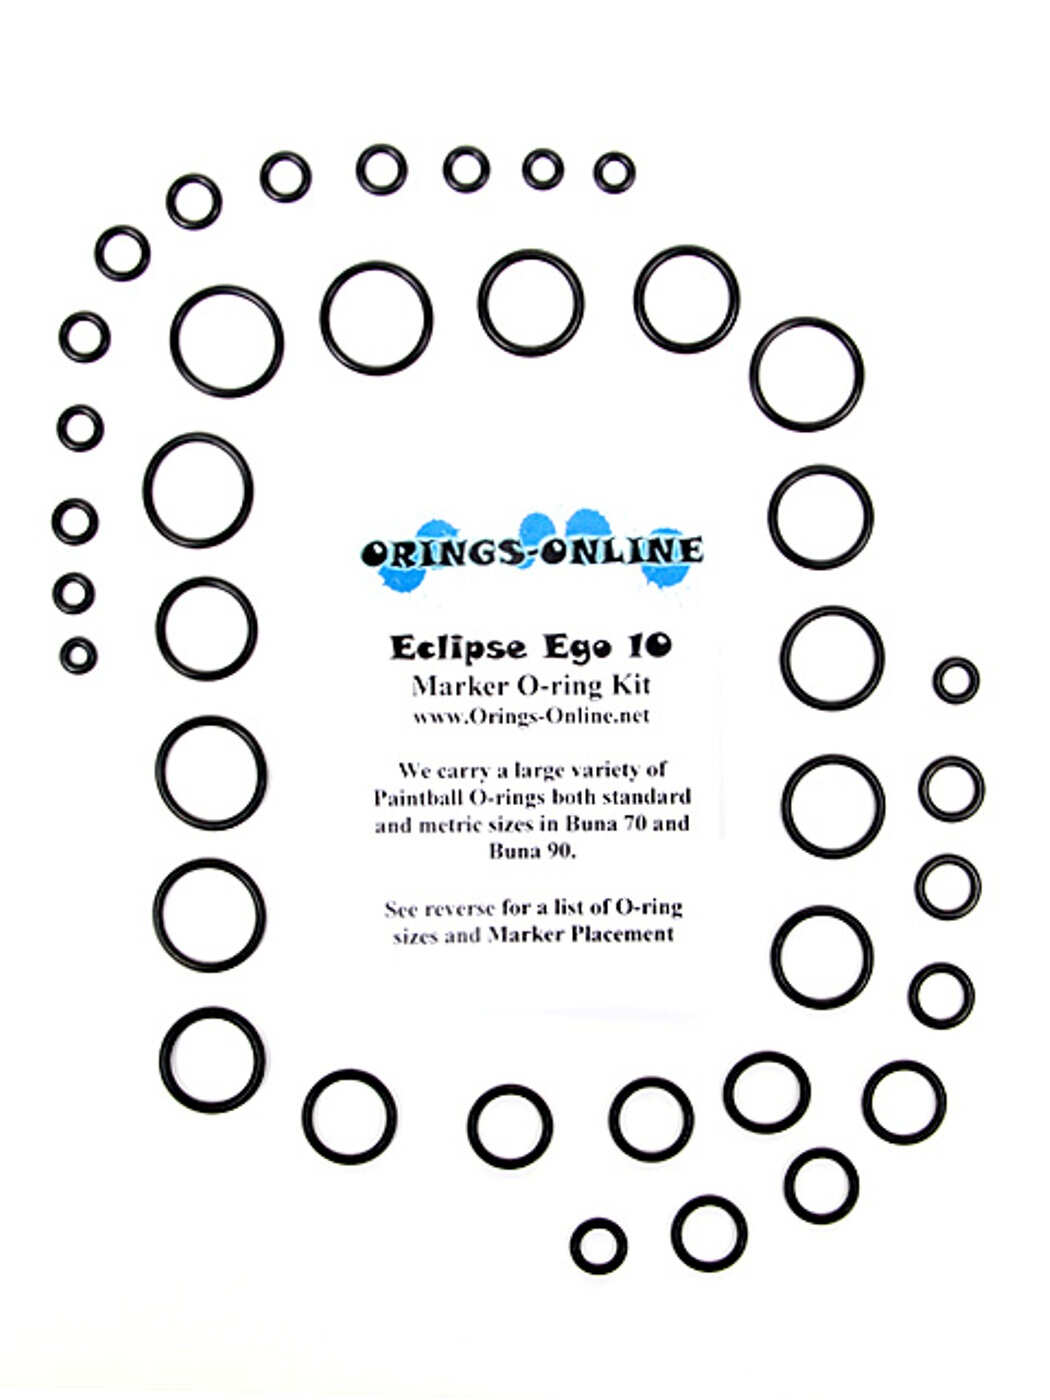 Planet Eclipse Ego 10 Marker O-ring Kit